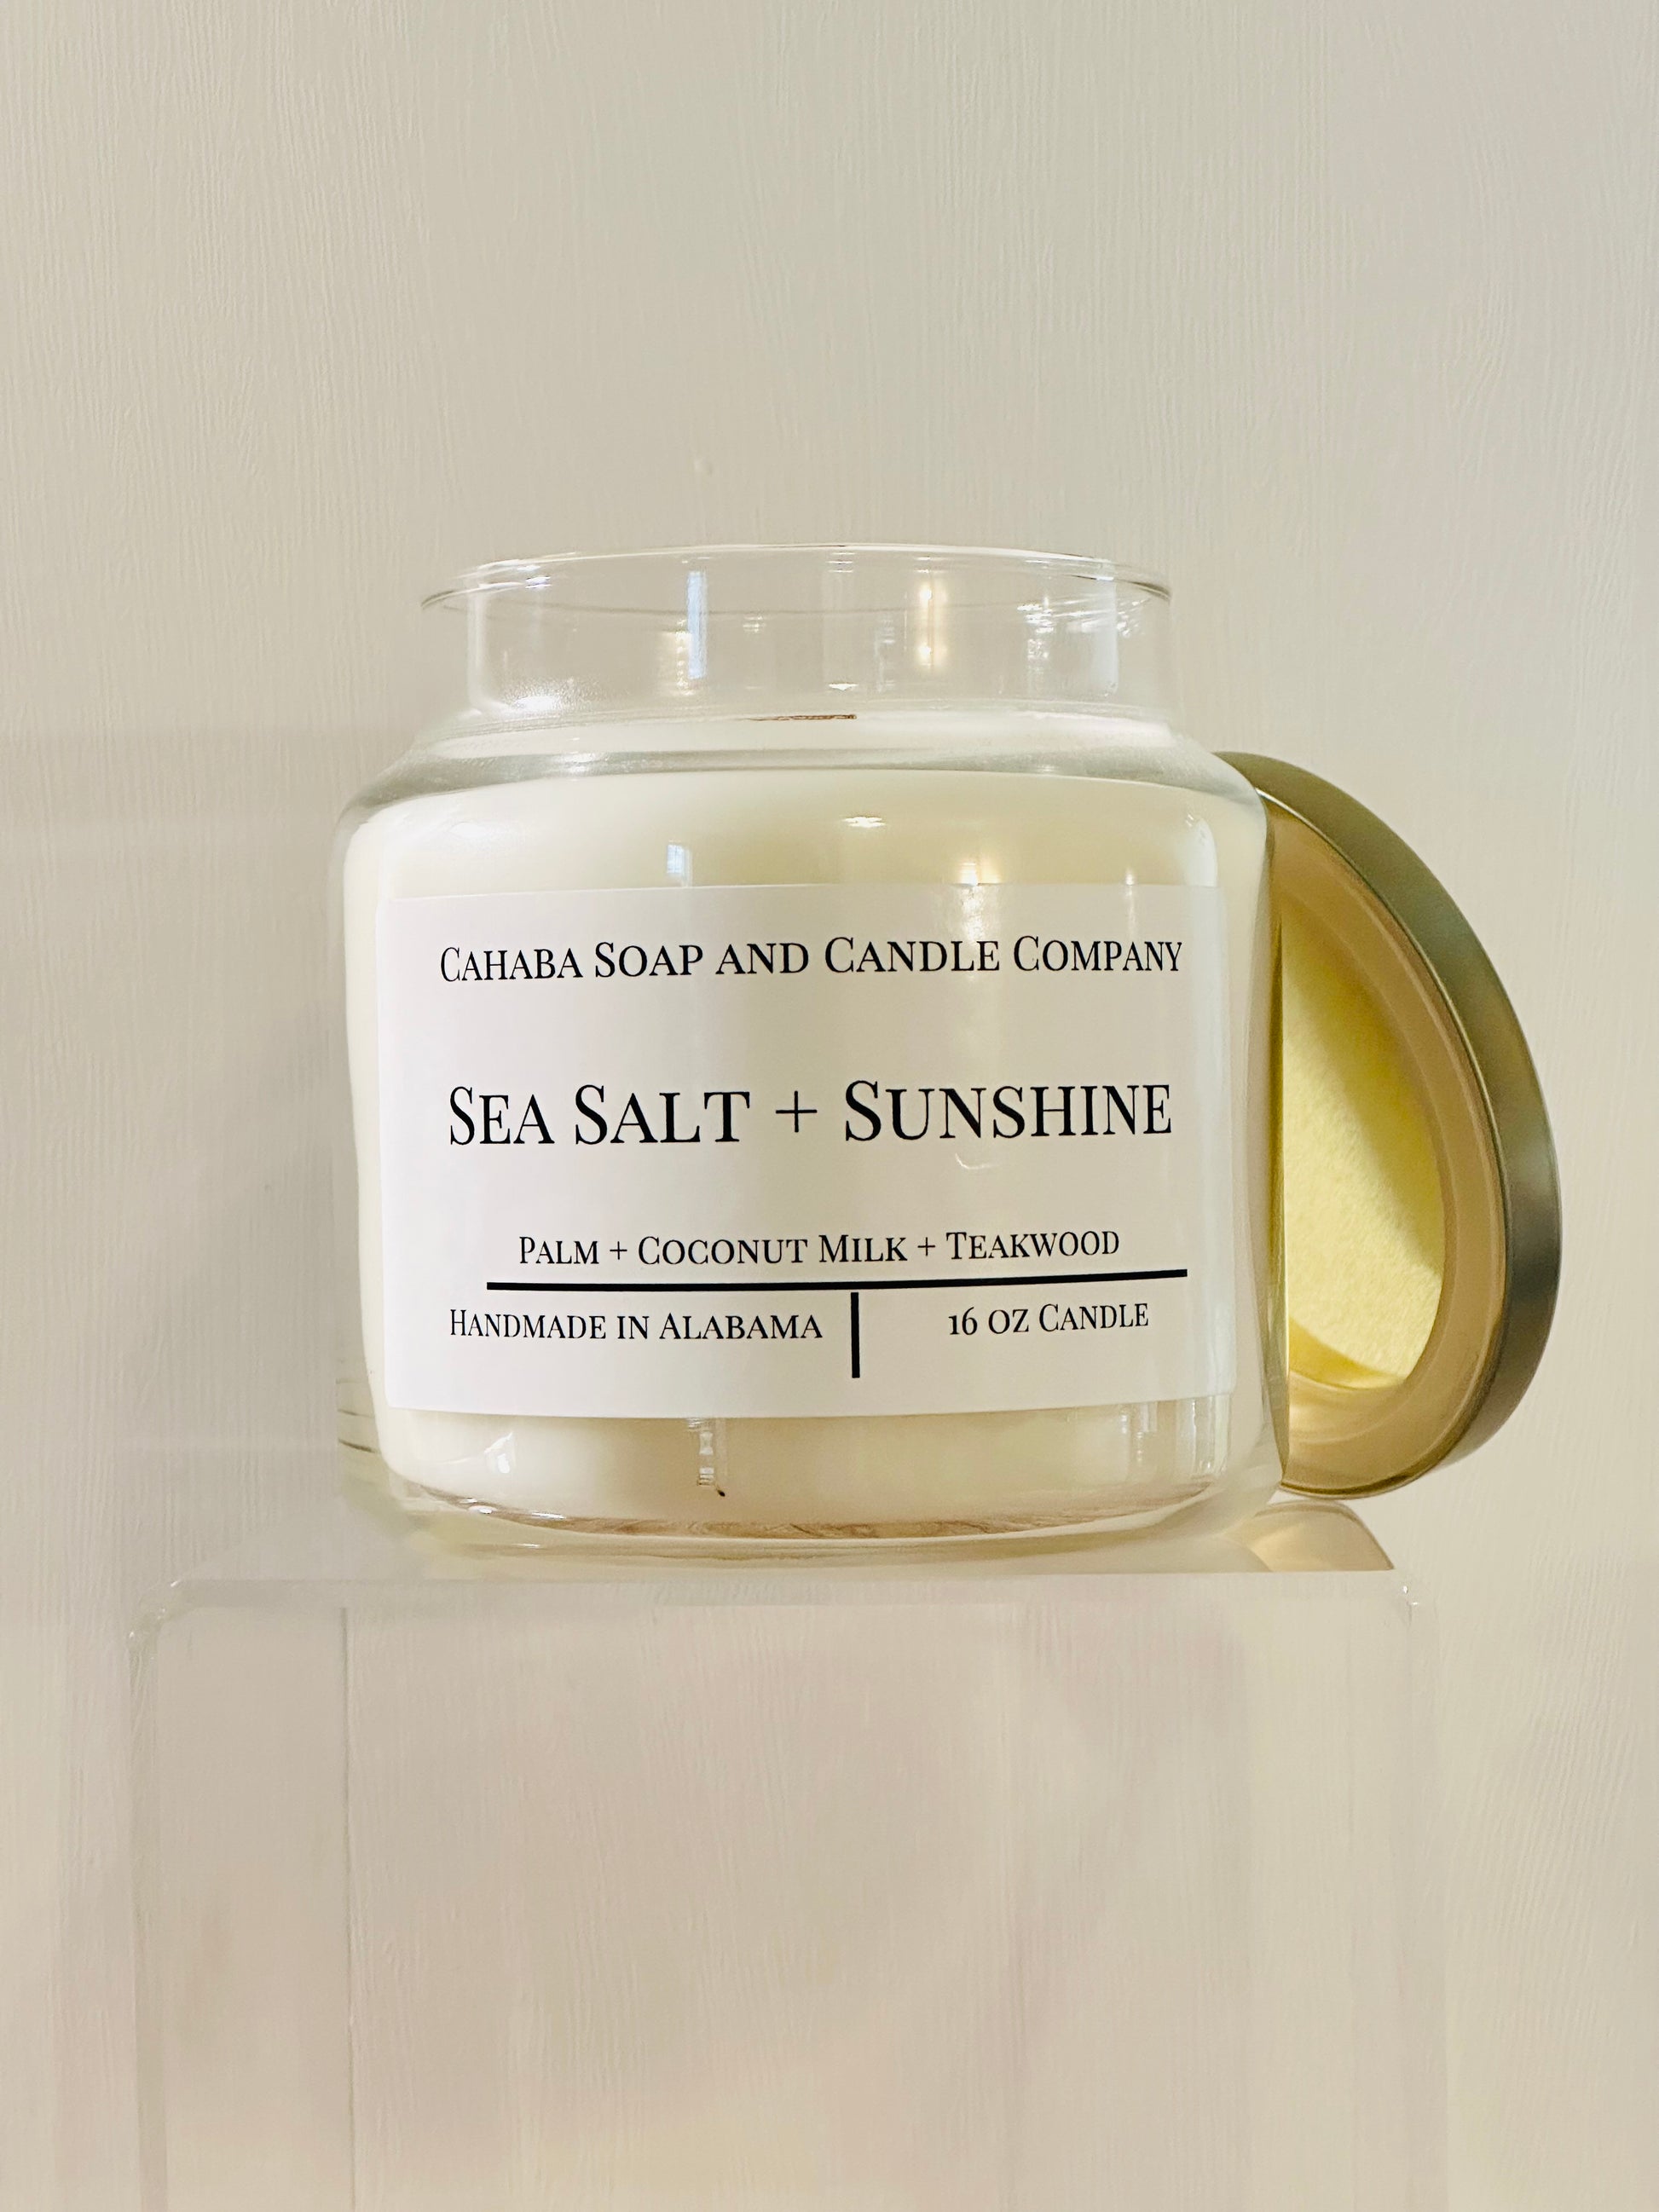 Sea Salt + Sunshine - Cahaba Soap and Candle Company